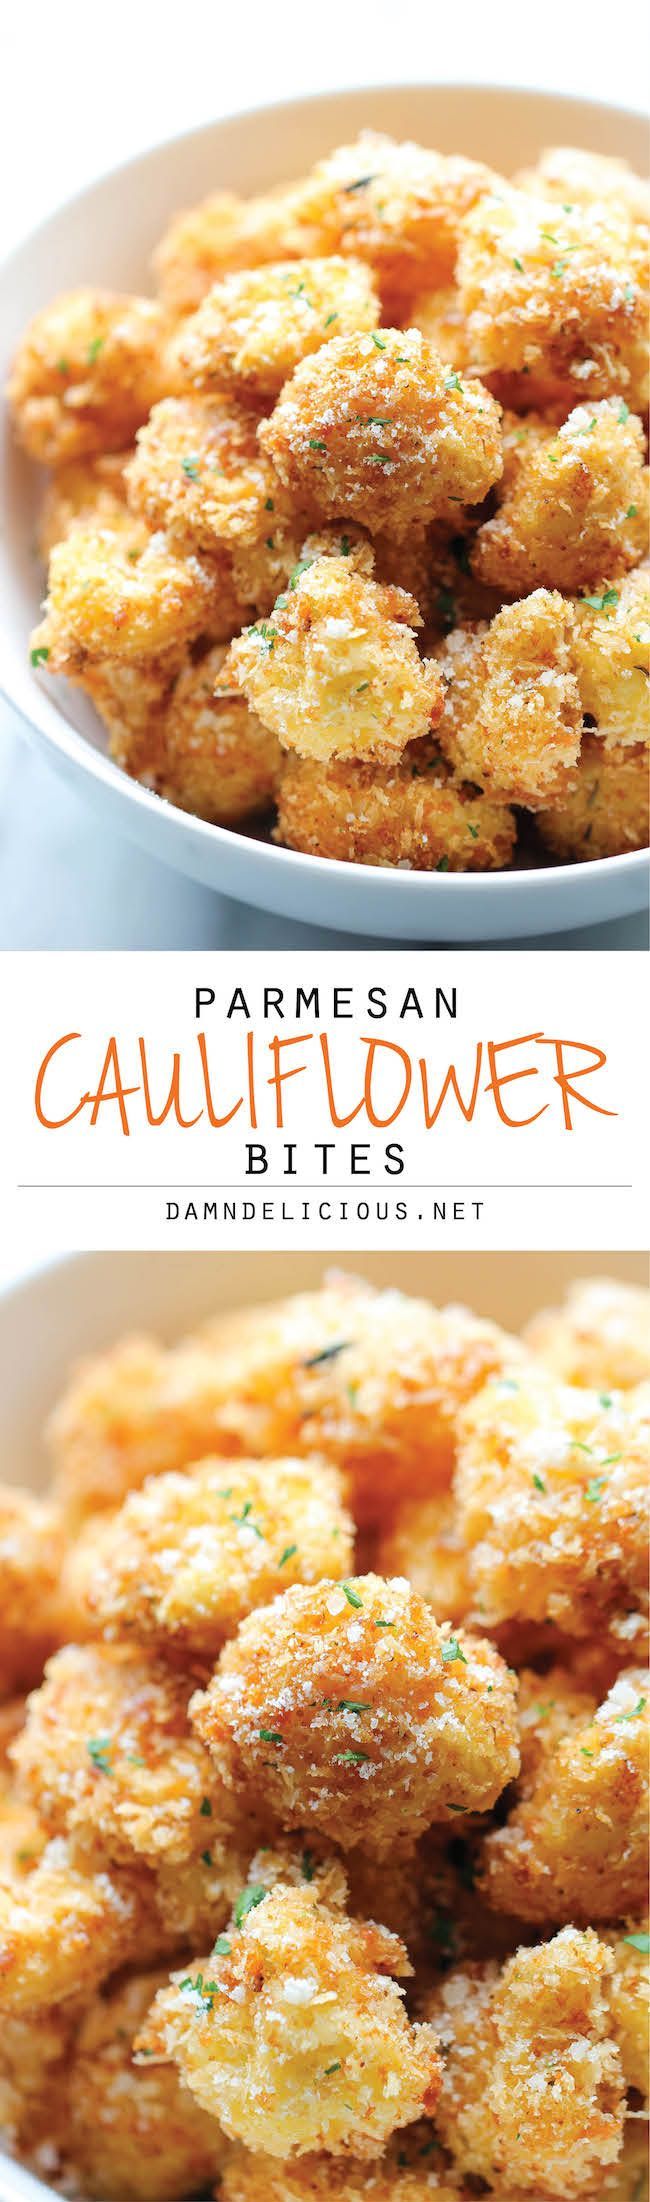 Parmesan Cauliflower Bites – Crisp, crunchy cauliflower bites that even the pick